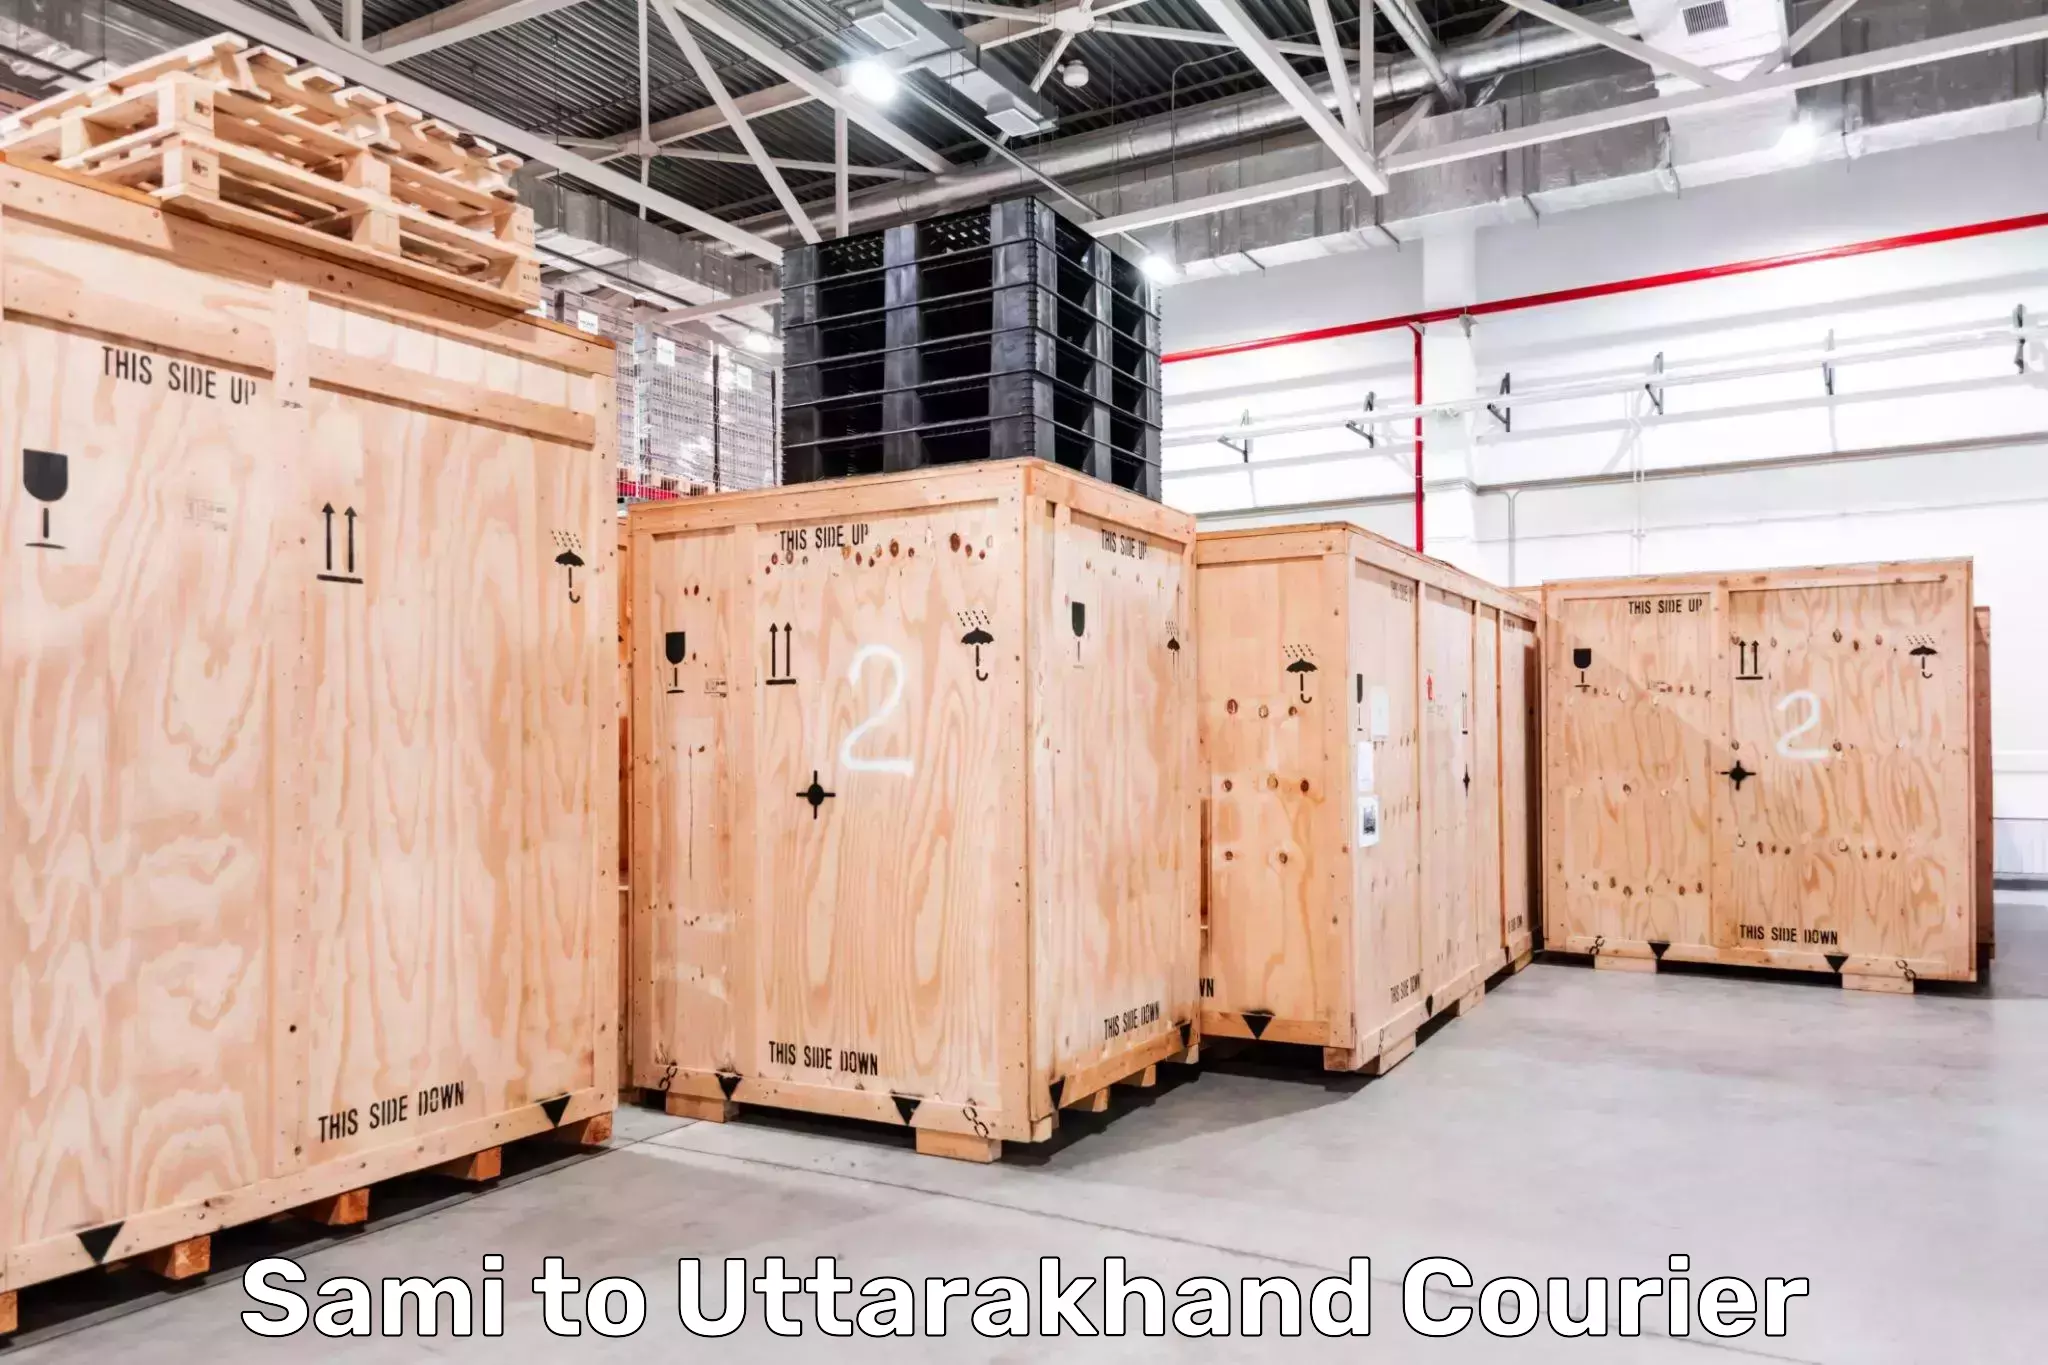 Global logistics network Sami to Uttarakhand